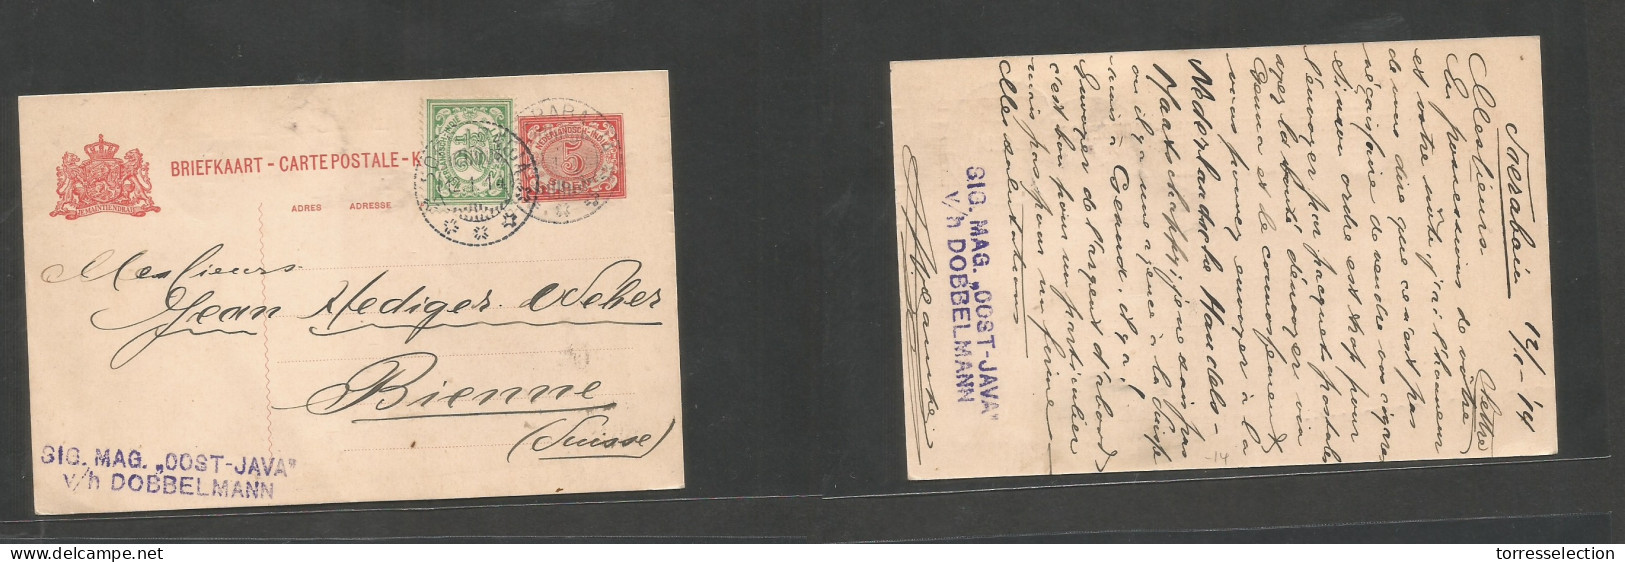 DUTCH INDIES. 1914 (12 Apr) Soerabaja - Switzerland, Bienne 5c Red Stat Card + 2 1/2c Green Adtl, Cds. Fine Used. - Indes Néerlandaises